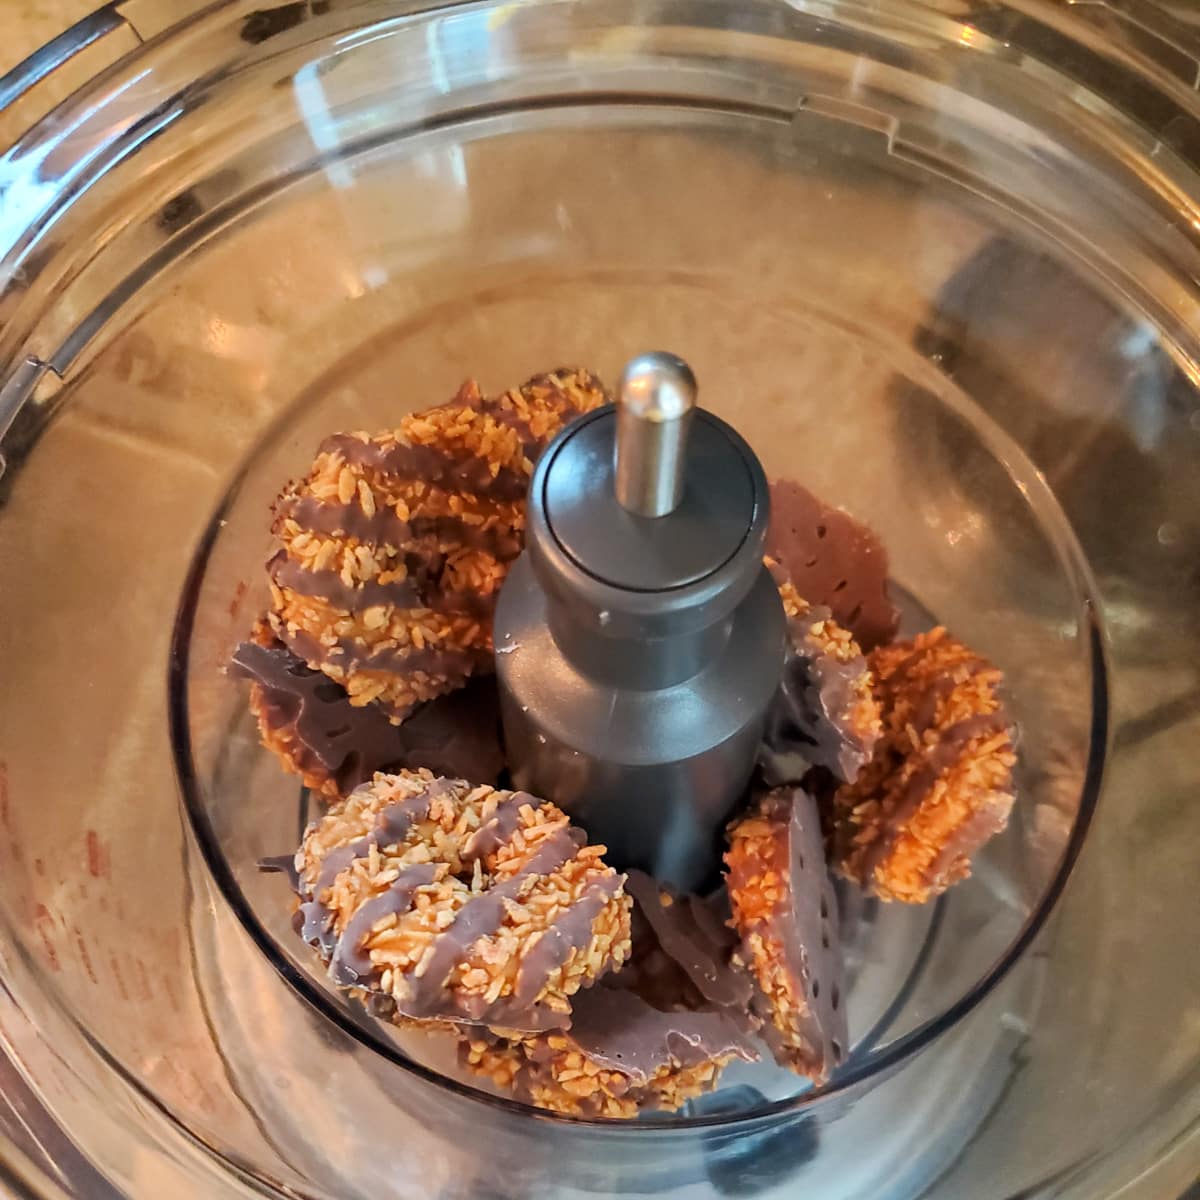 Samoas cookie in a food processor.